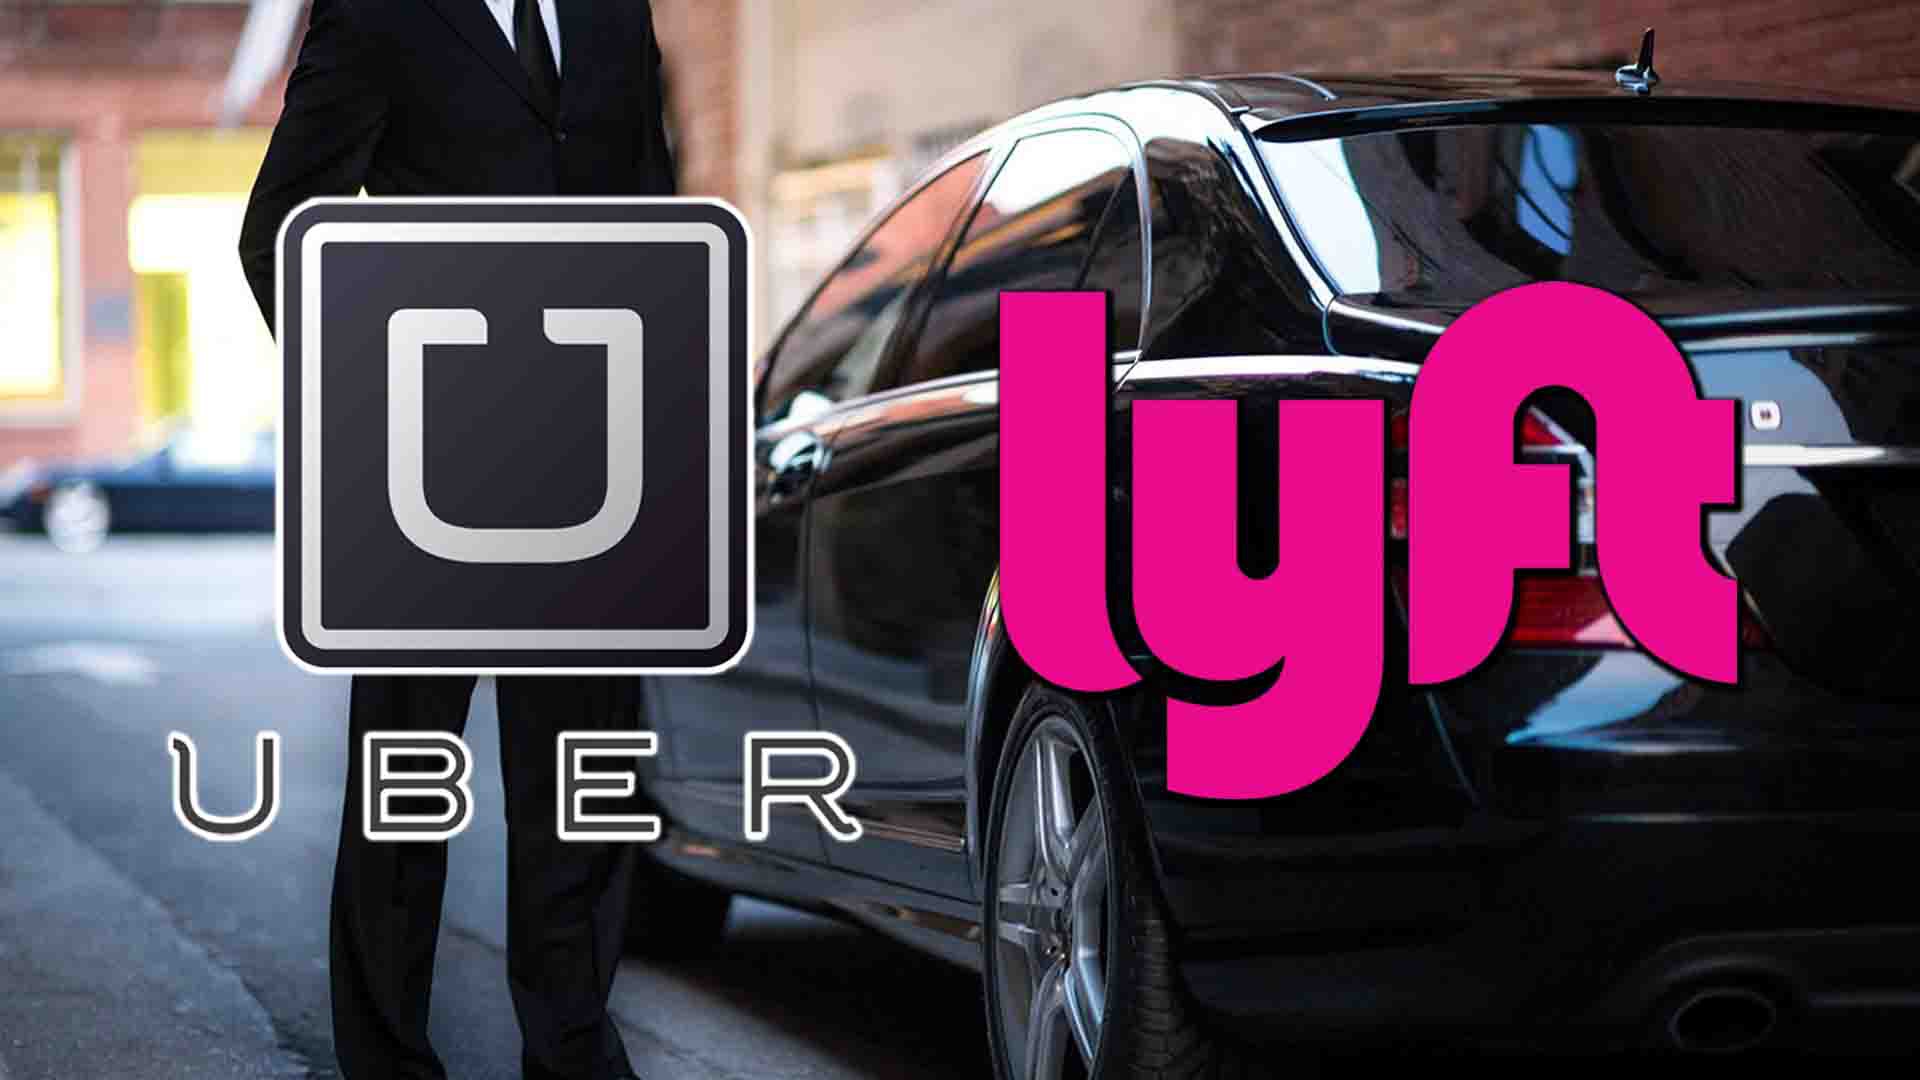 HustleTV Uber and Lyft threatened to shut down by judge DJ Hustle